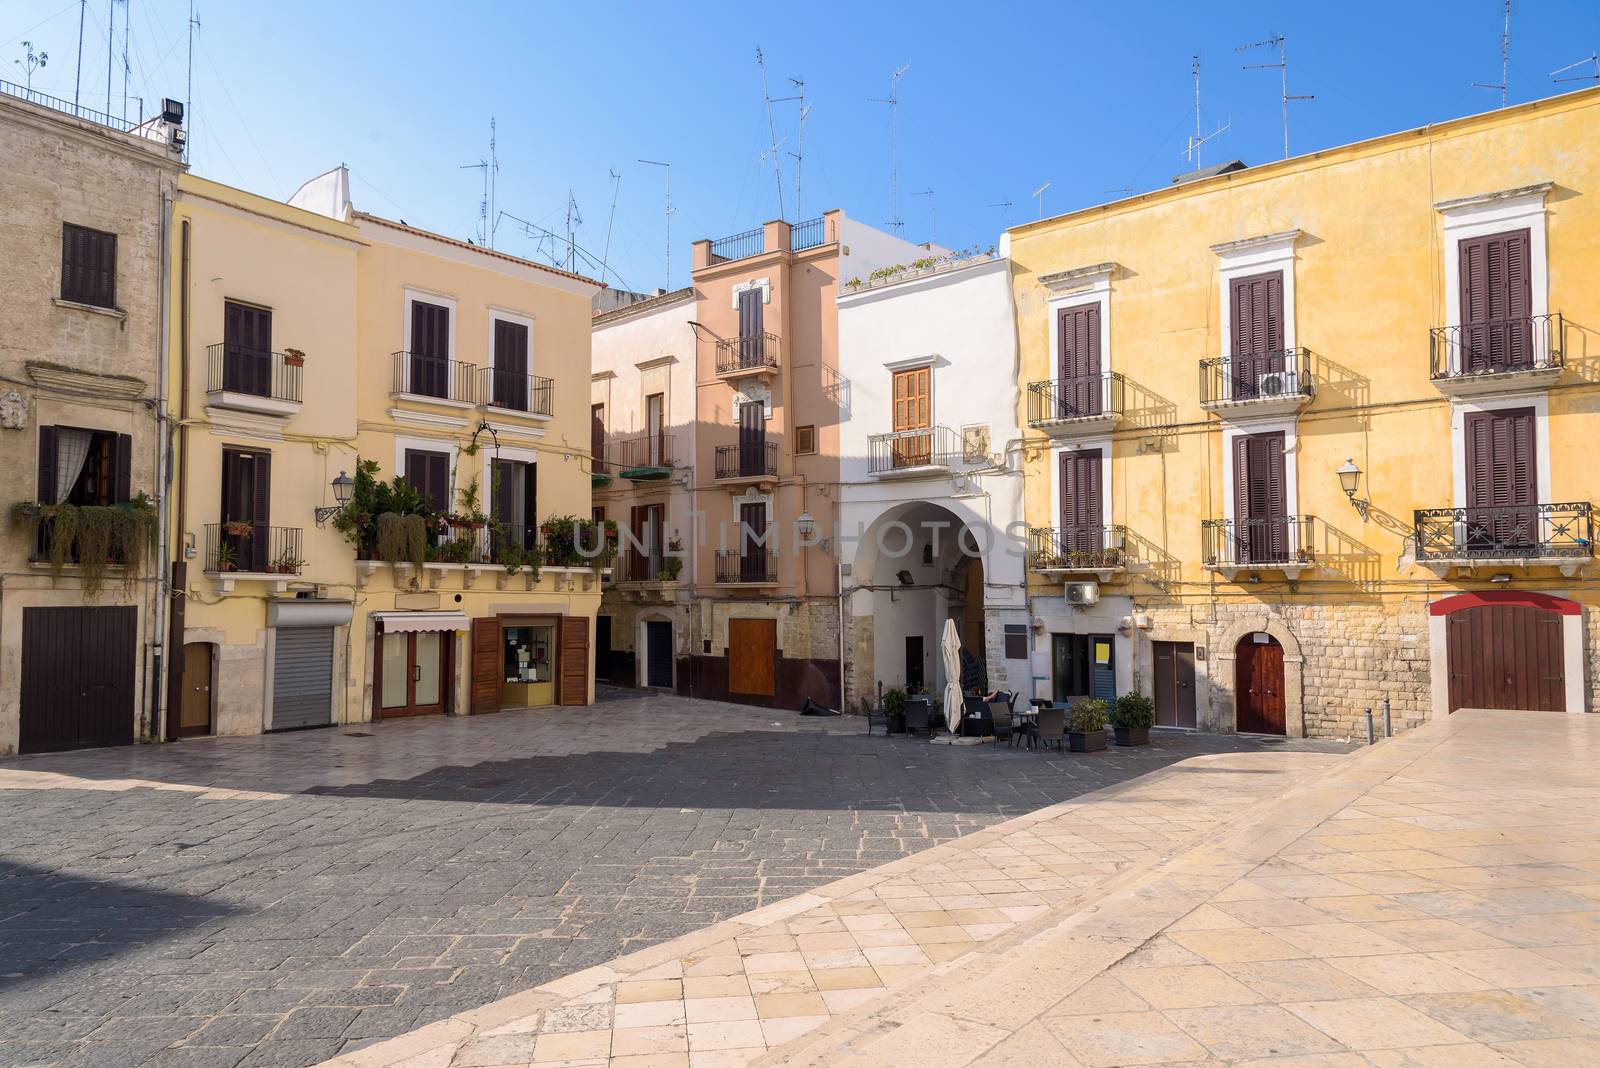 View of small town square called Piazza dell'Odegitria in Bari, Italy